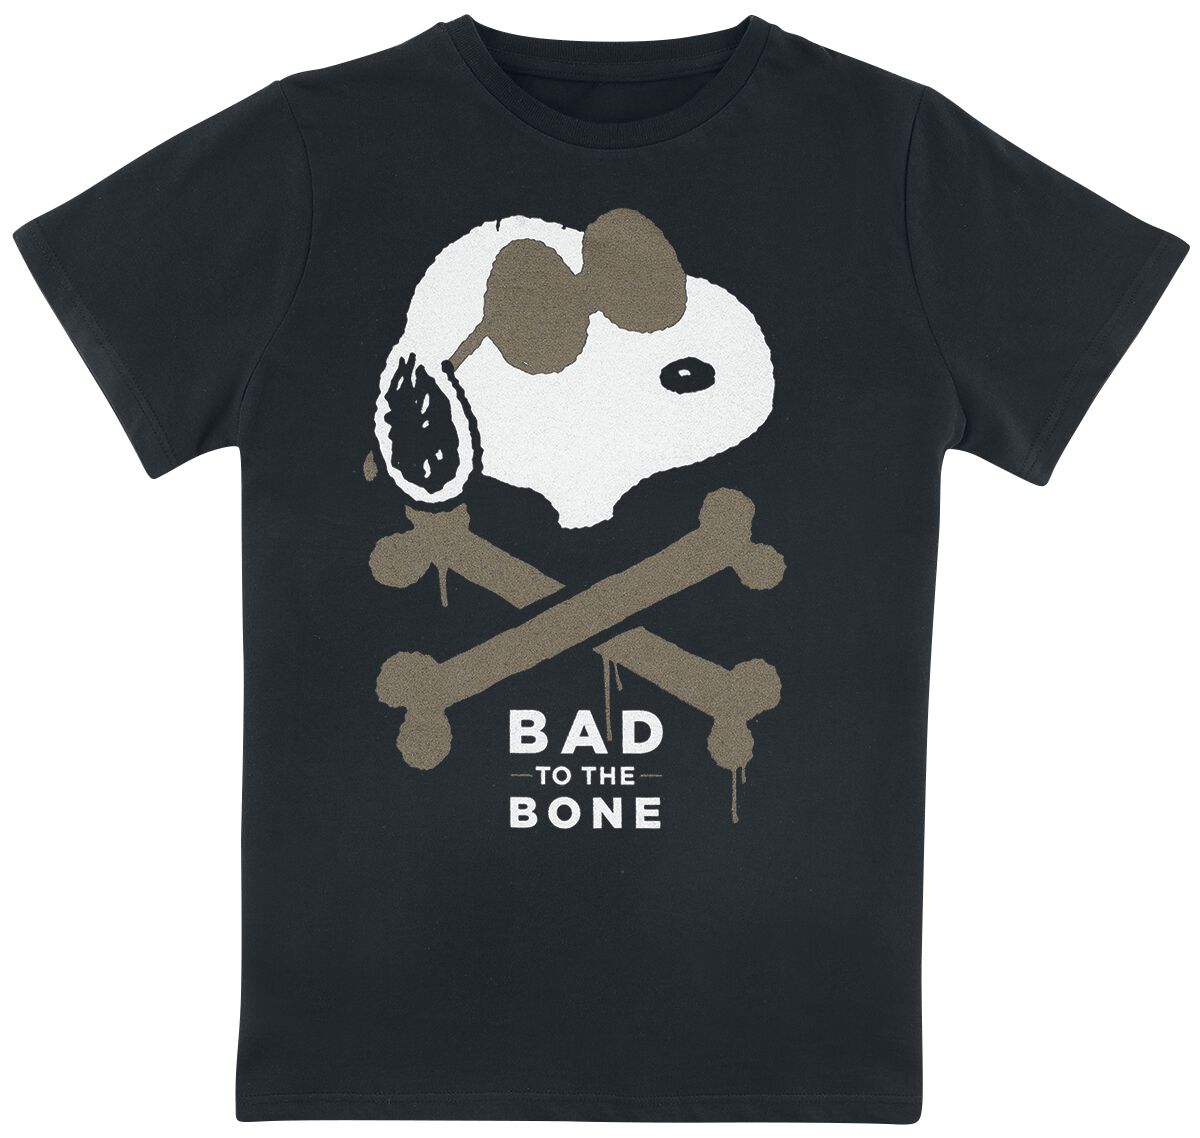 Peanuts Kids - Bad To The Bone T-Shirt black